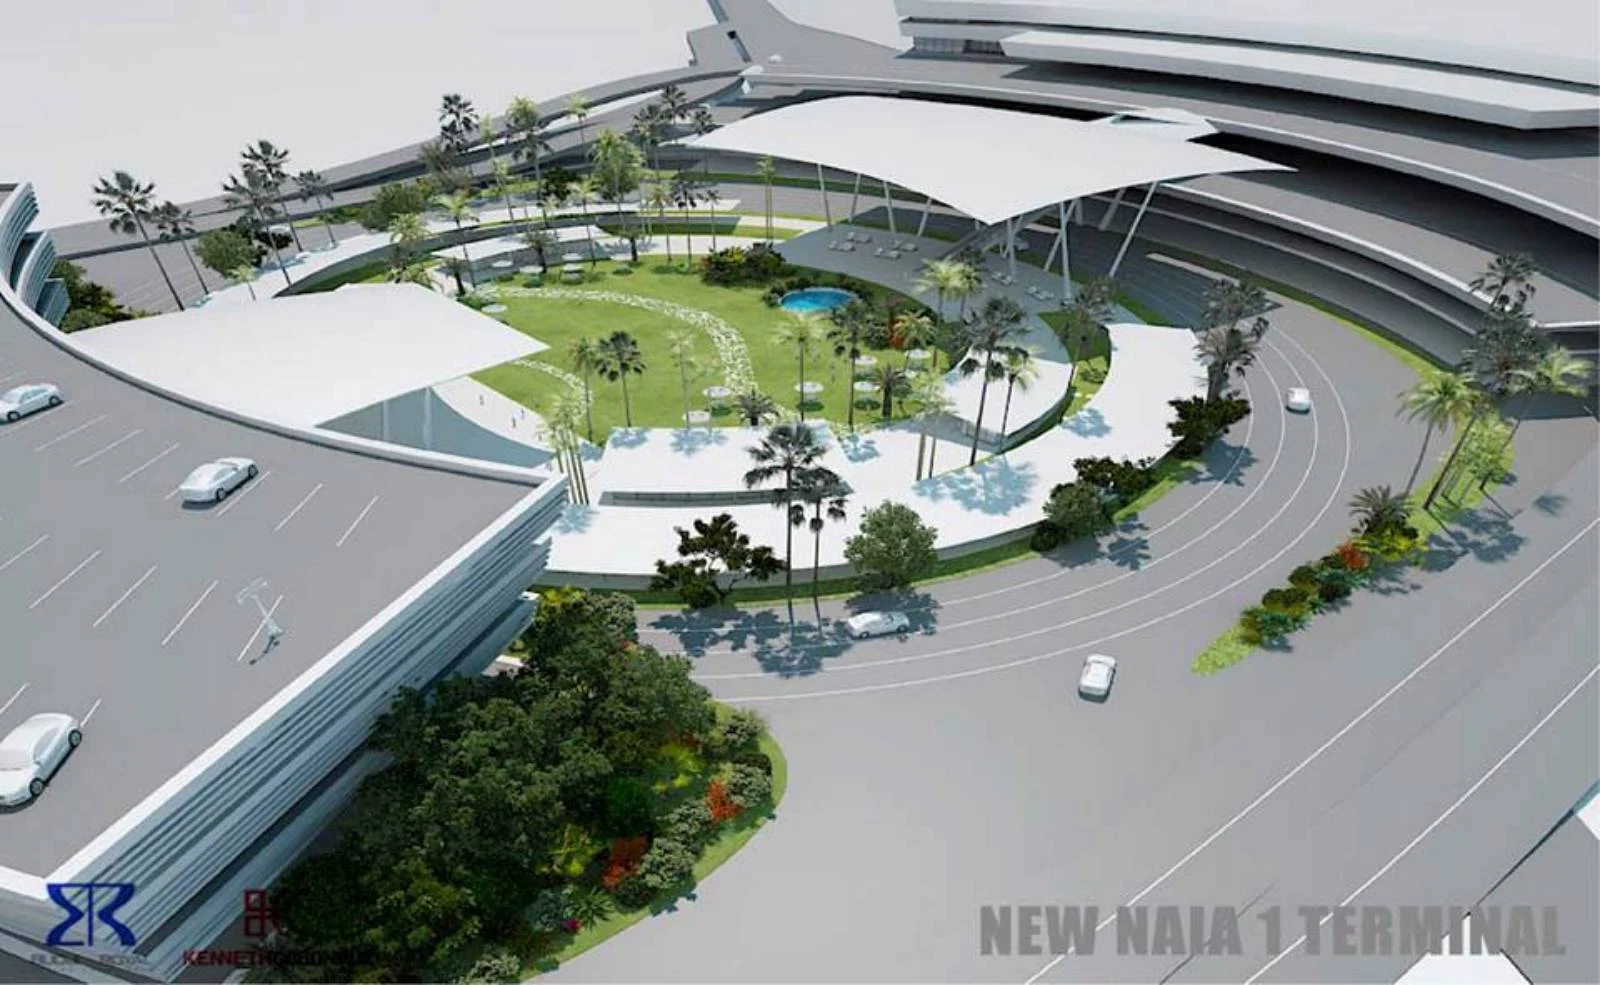 Naia Terminal 1 Rehabilitation